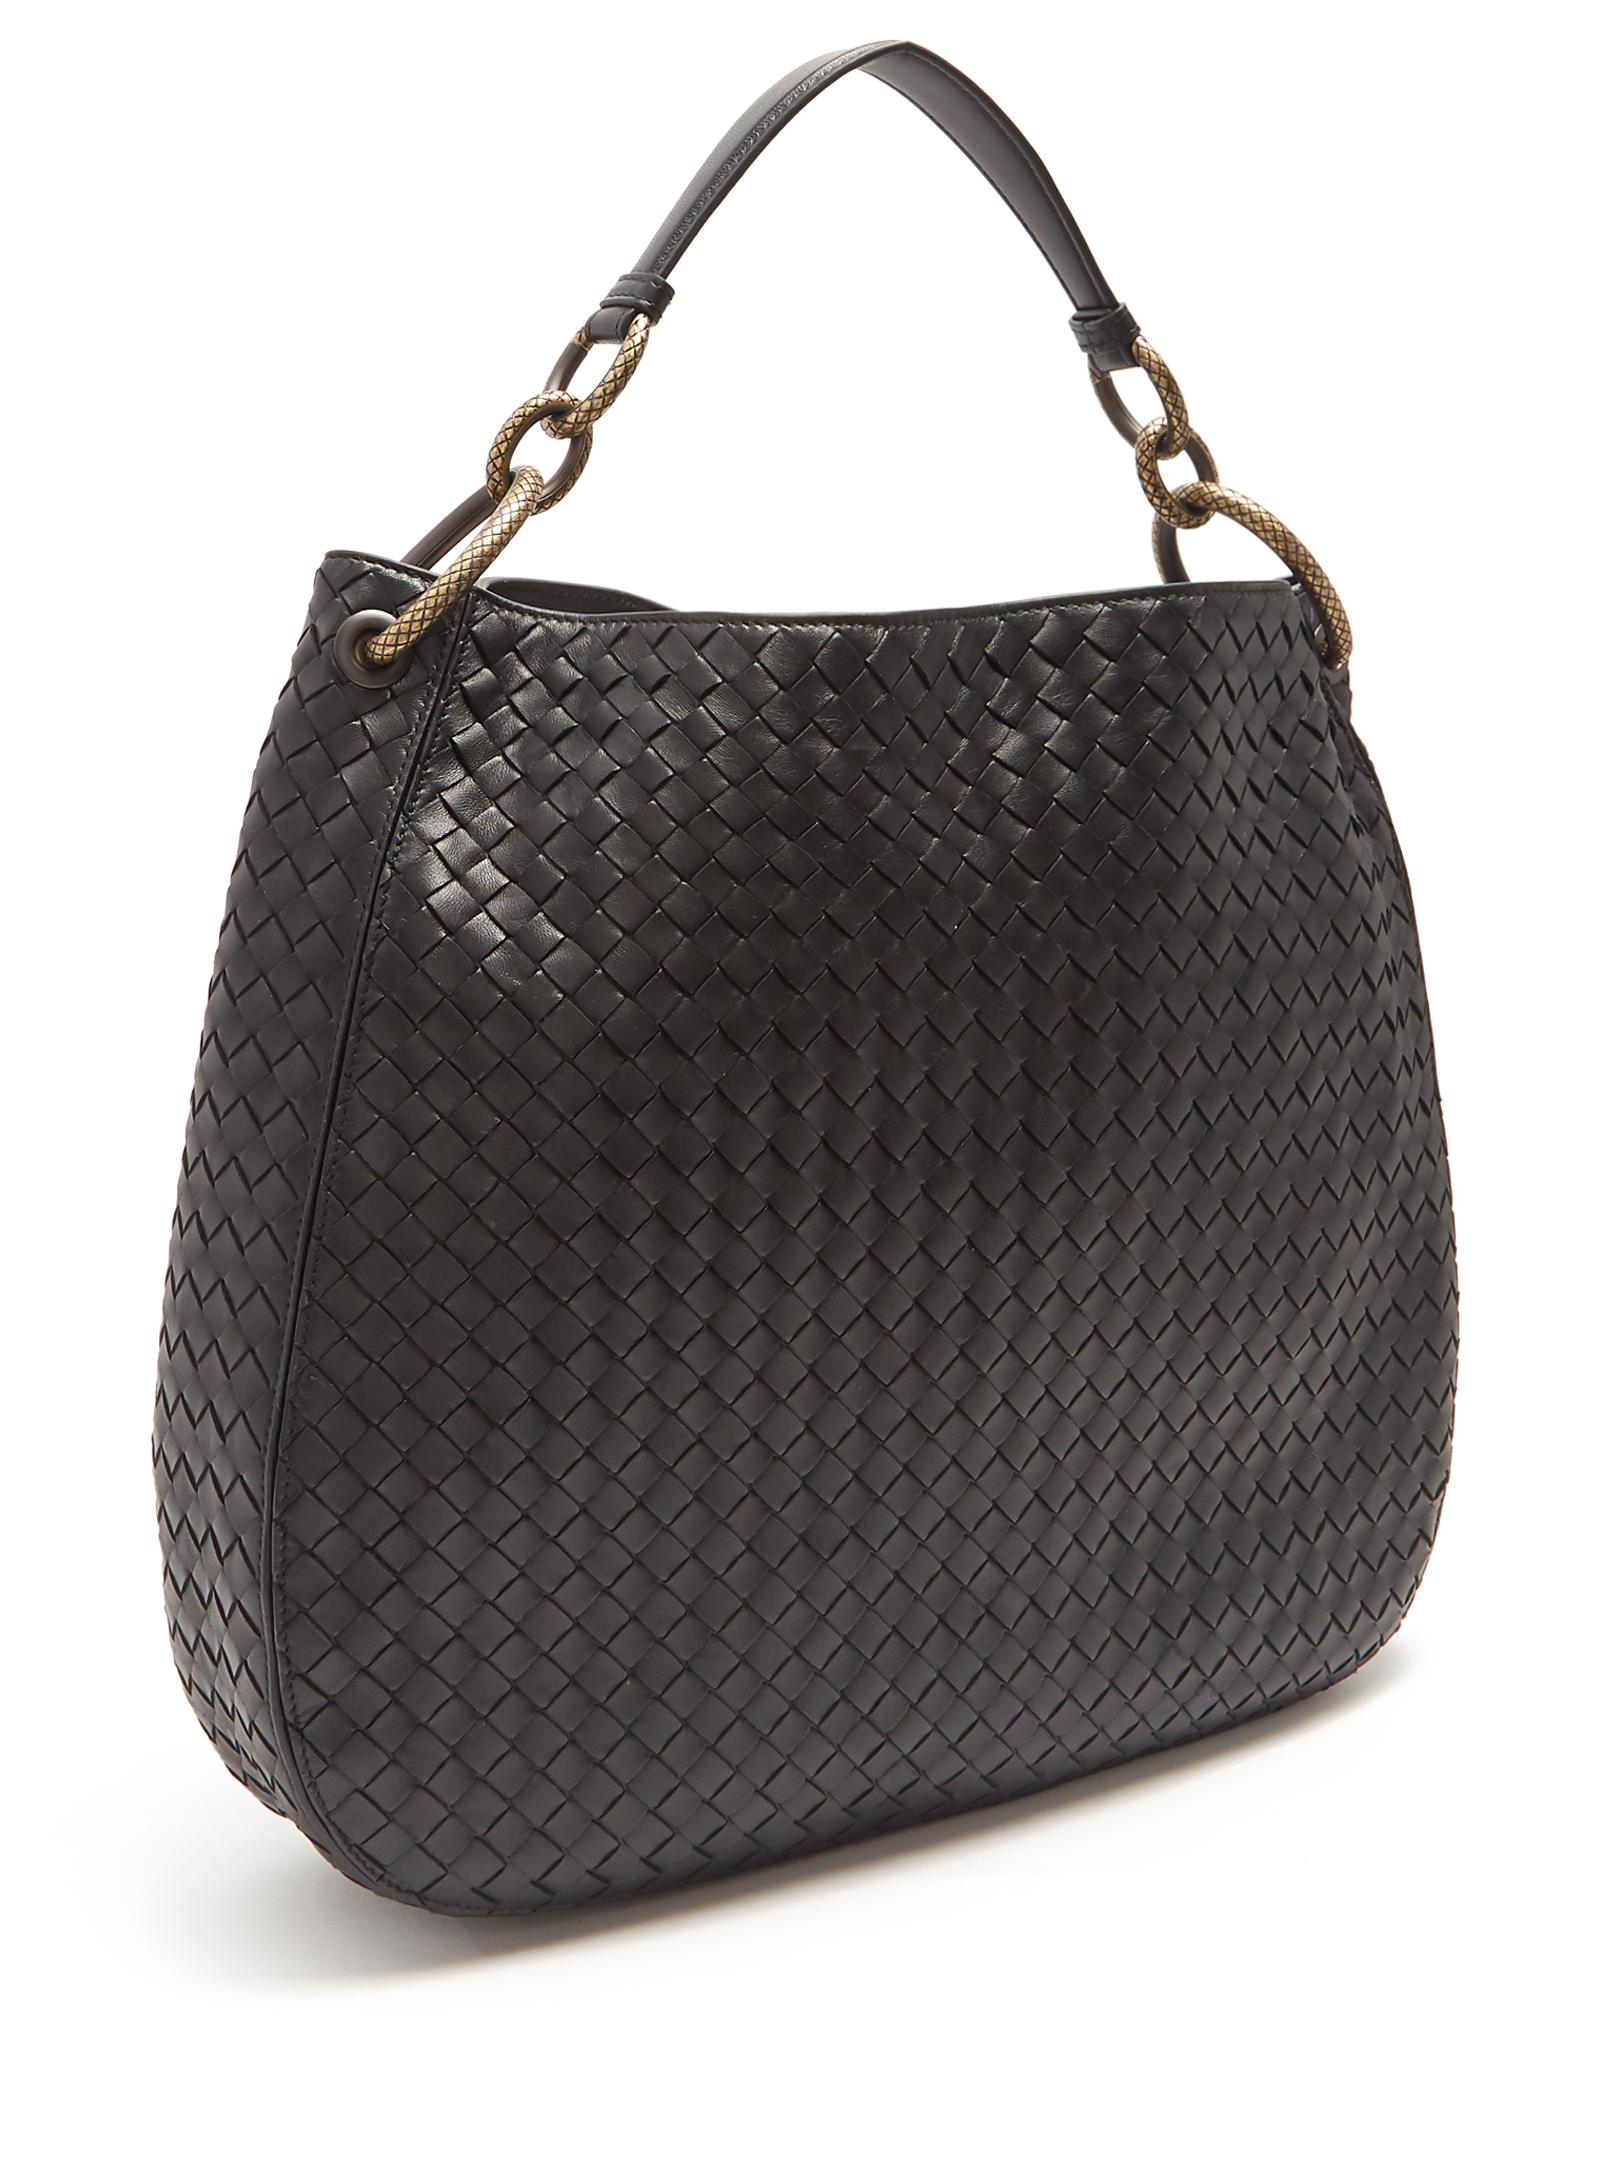 Bottega Veneta Loop Large Intrecciato Leather Shoulder Bag in Black - Lyst